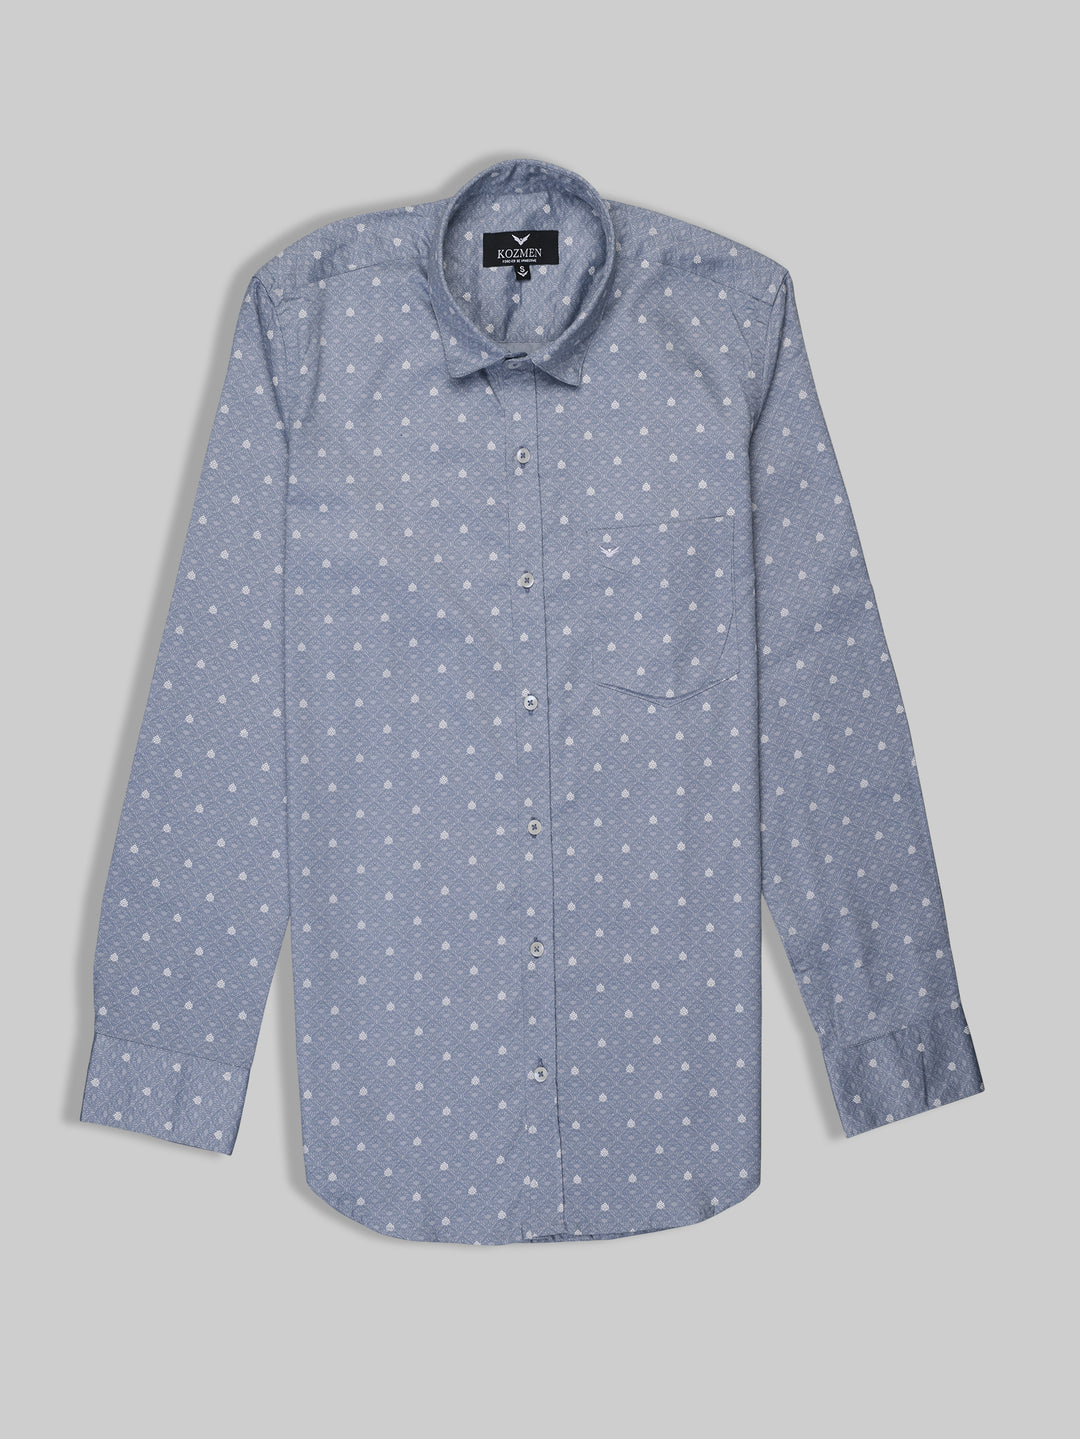 Damask Print Light Blue & Gray Cotton Shirt